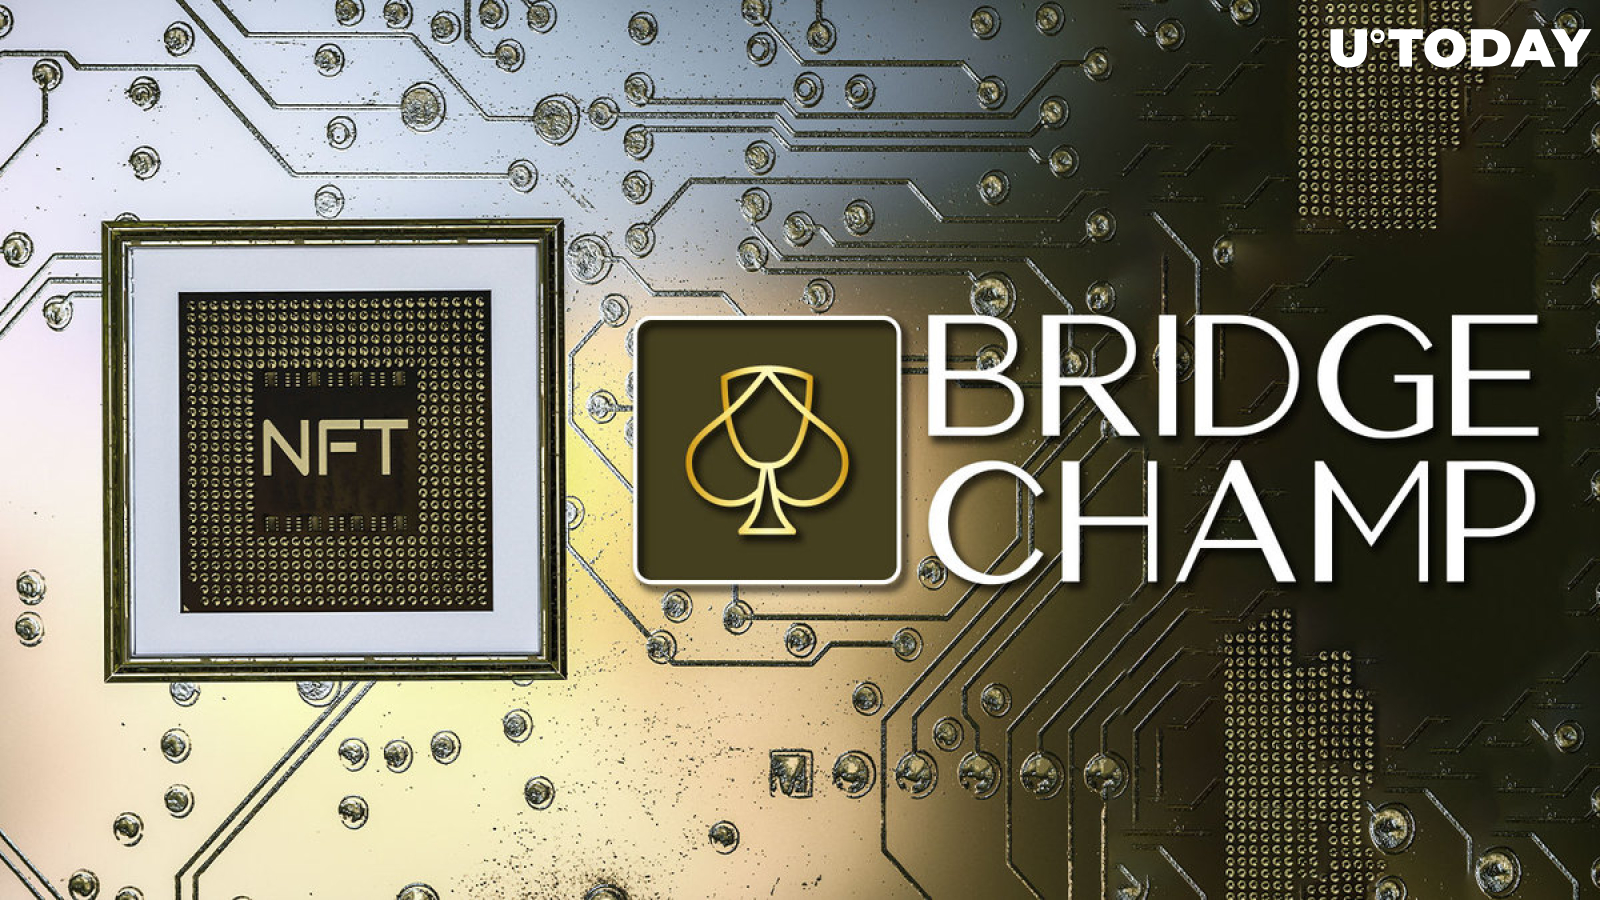 Bridge Champ Introduces NFT Badges and Crypto Rewards, New Roadmap Says